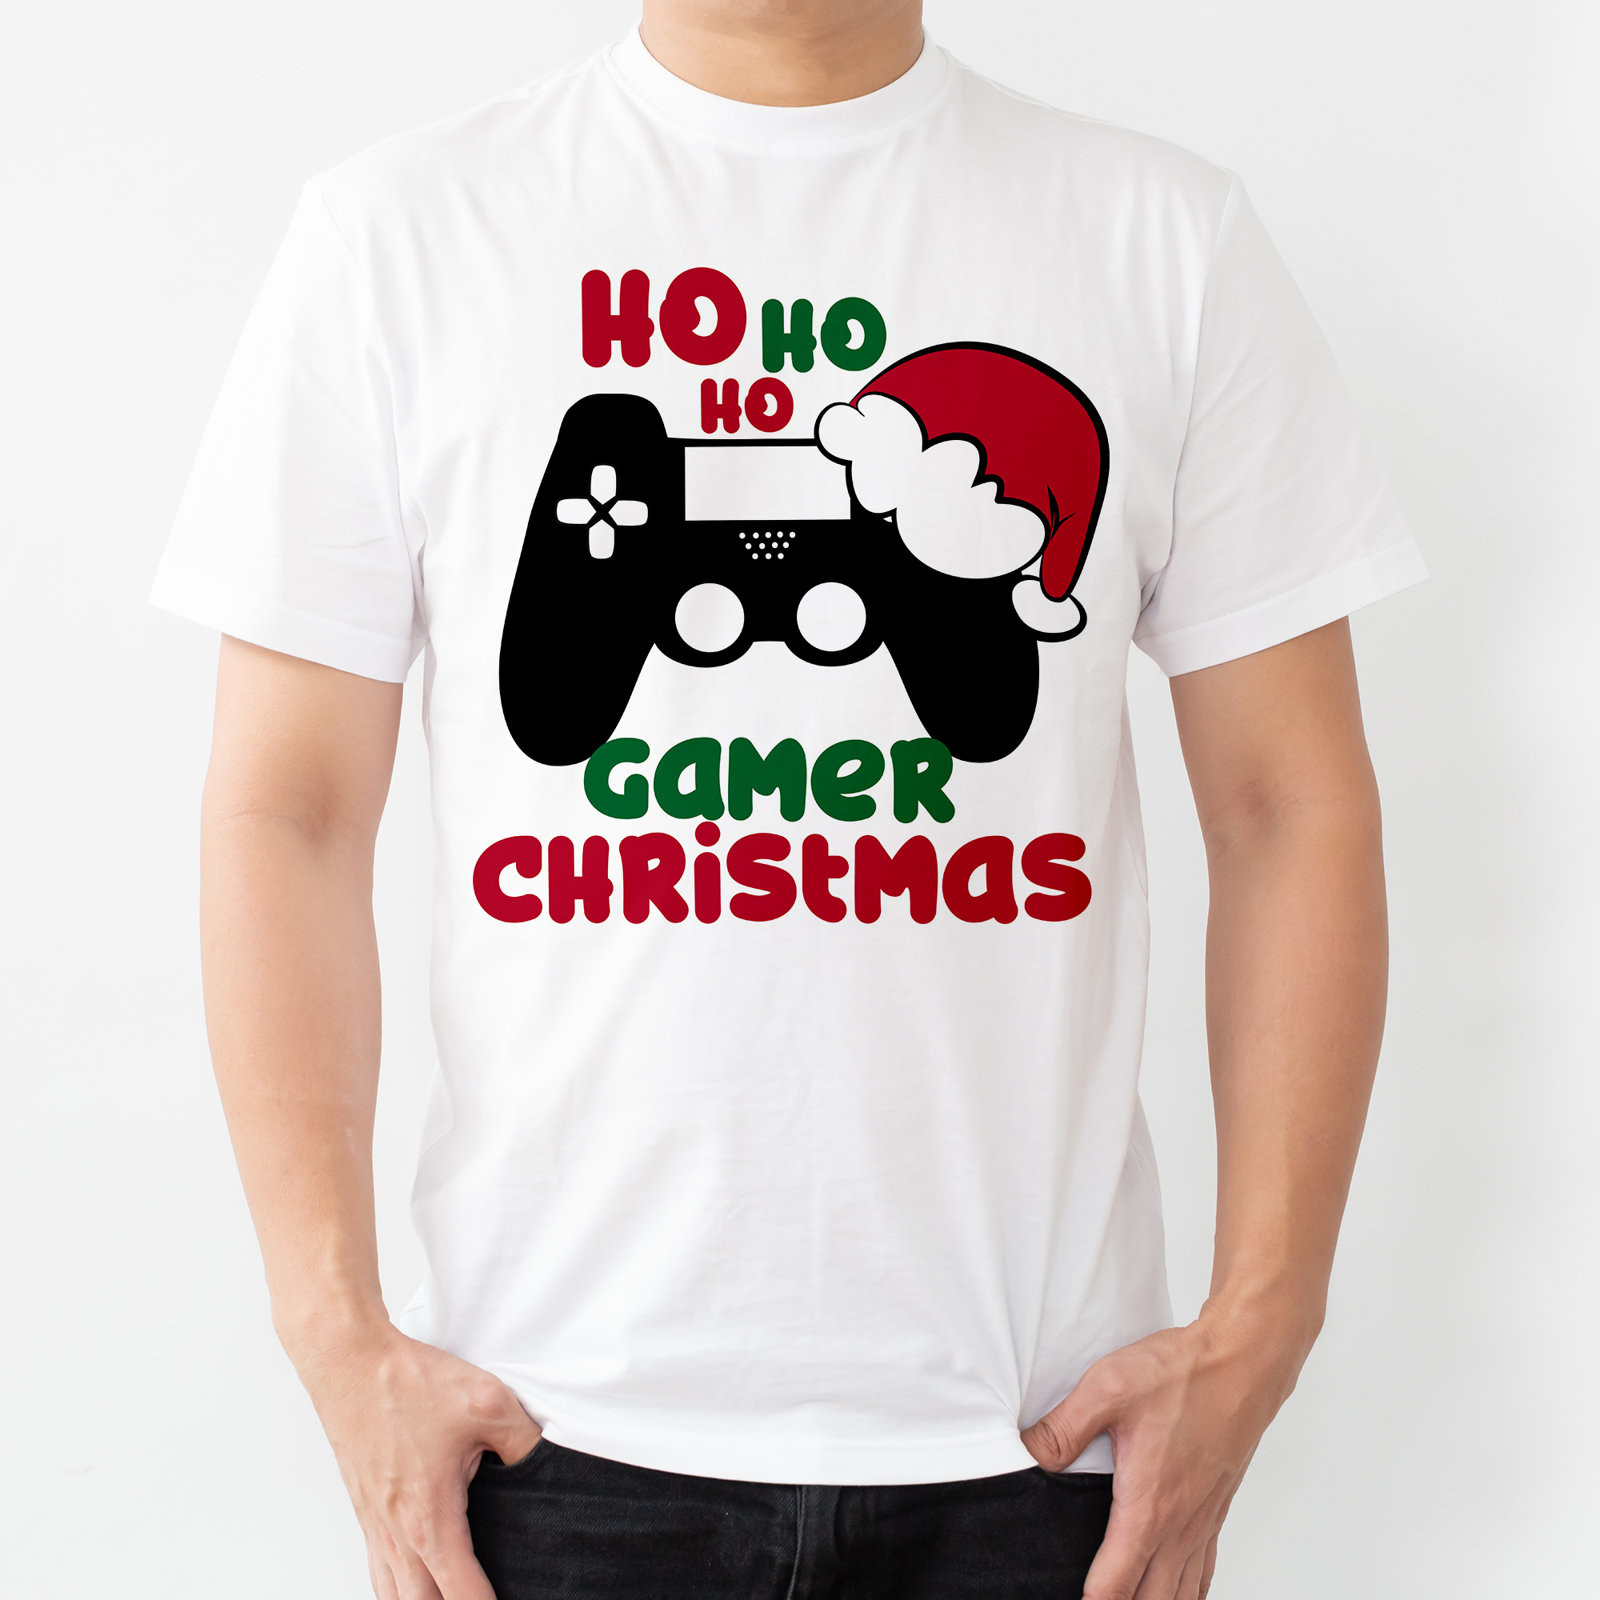 Poczpol Ho ho ho Gamer Christmas - koszulka męska 42672-A